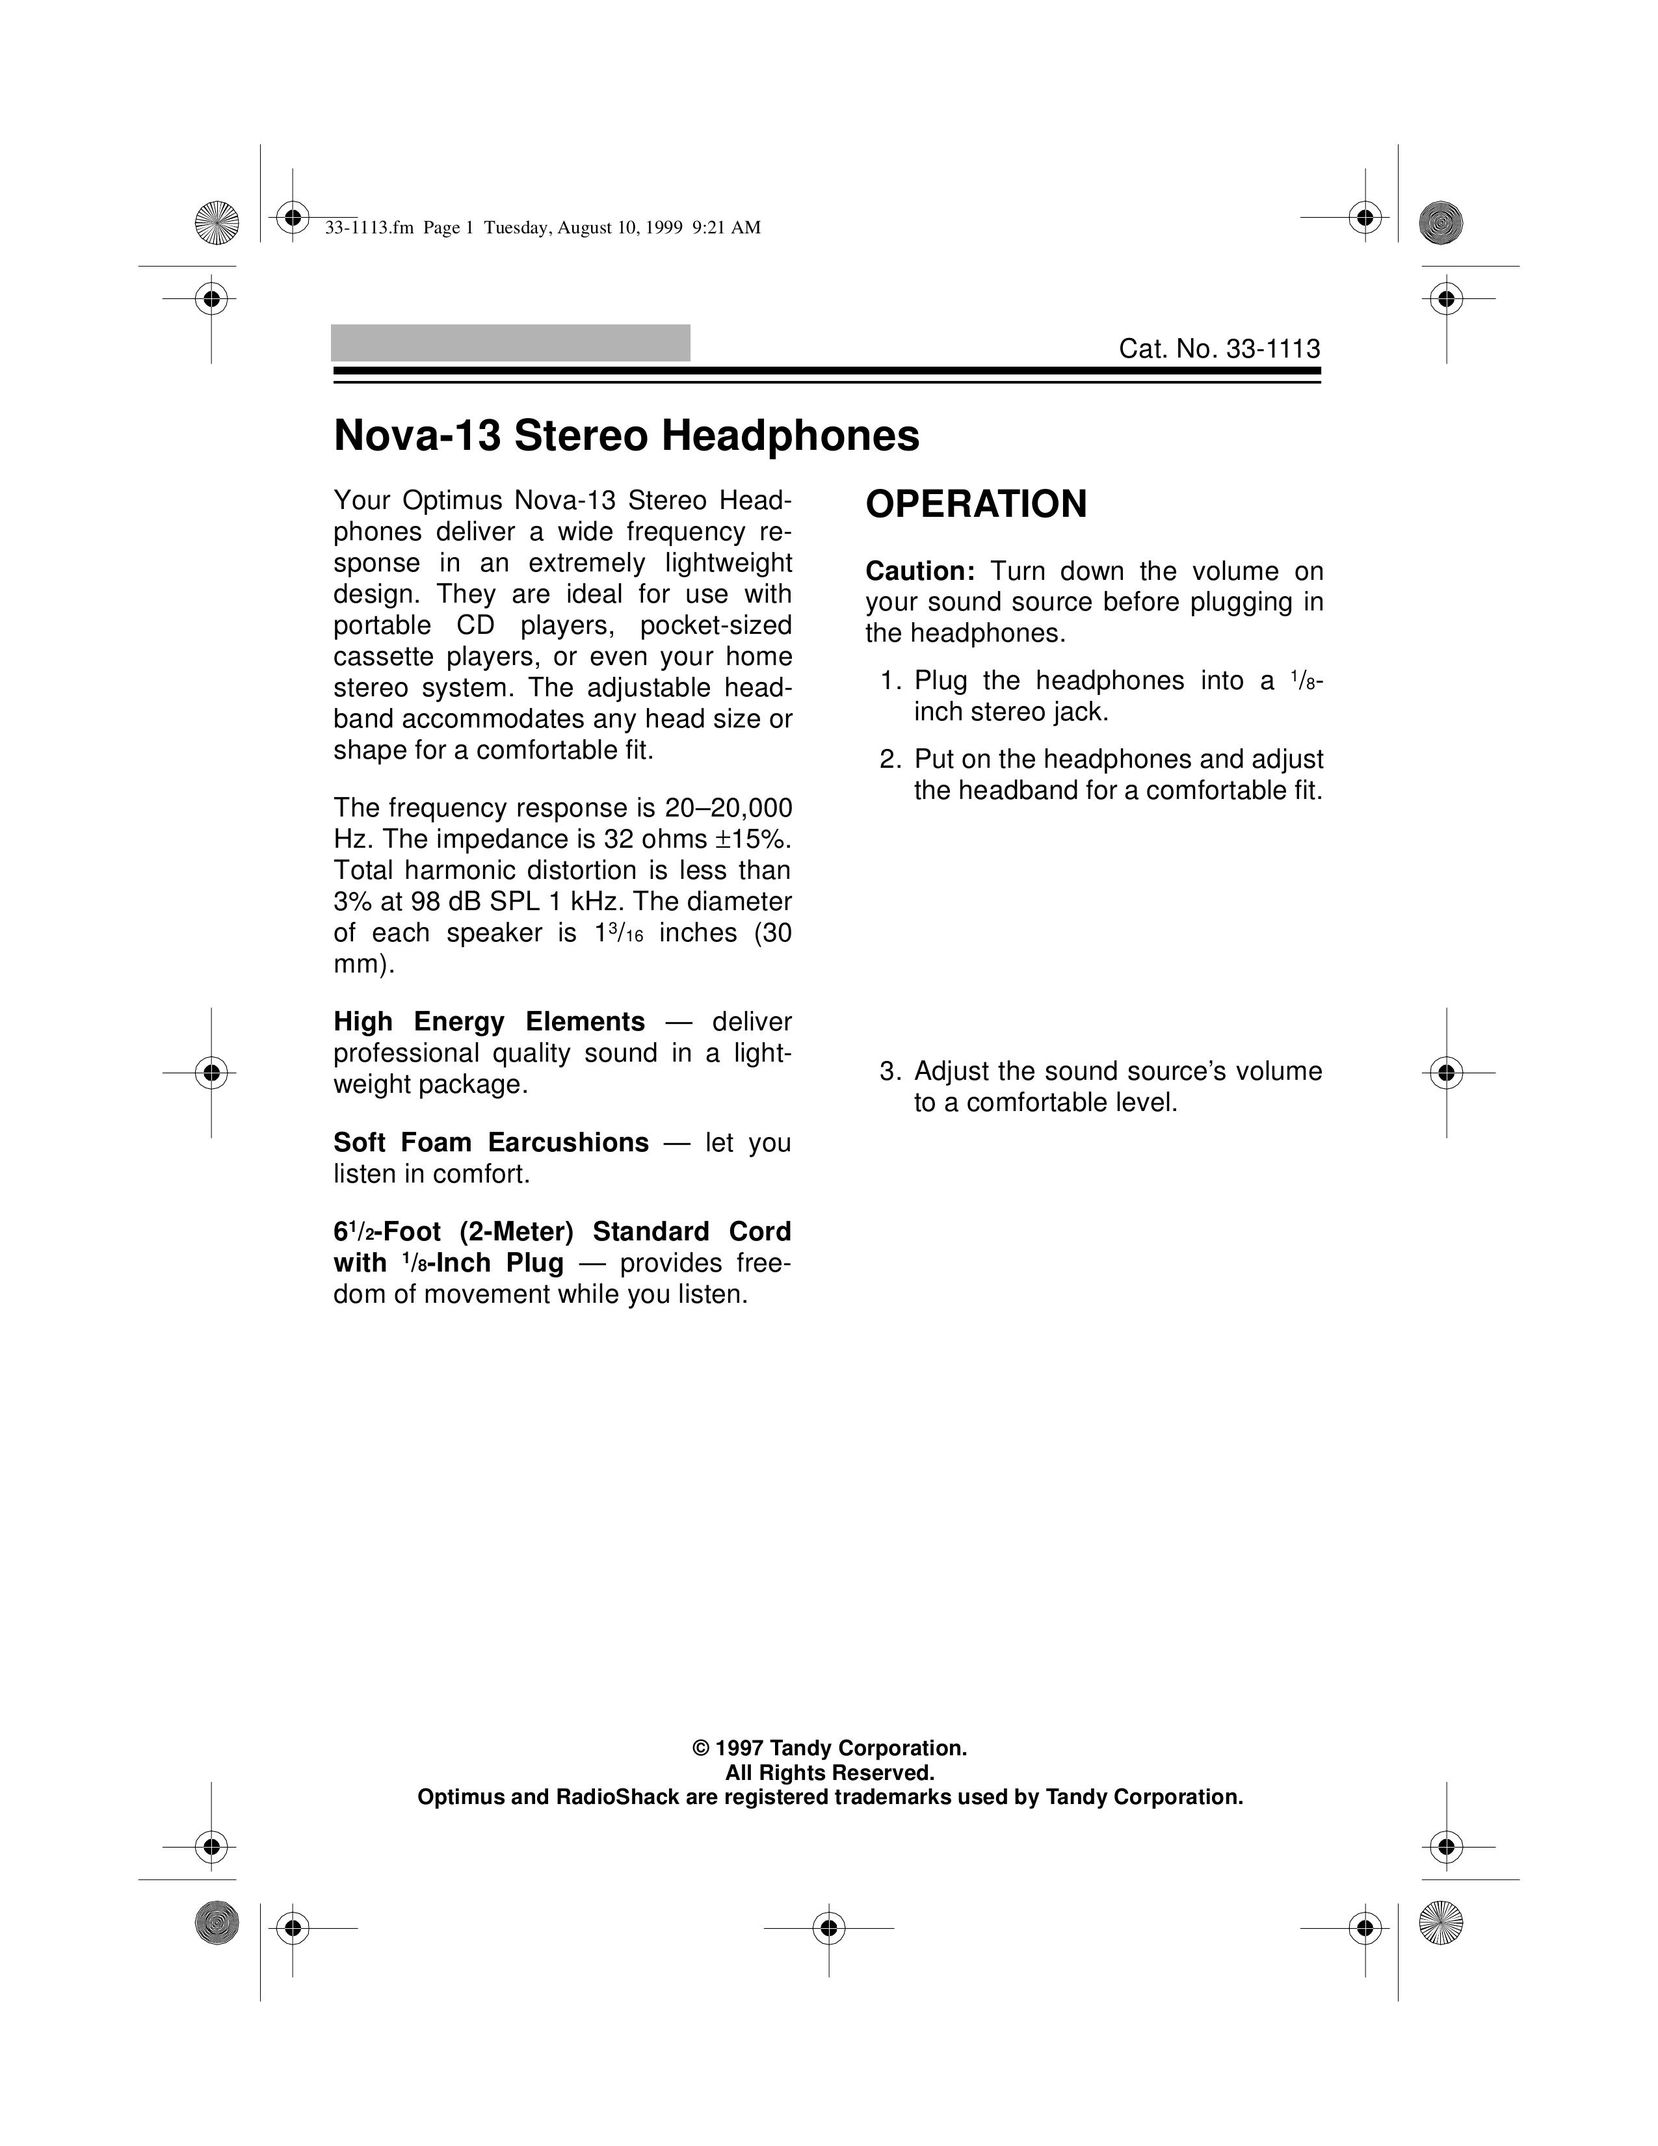 Radio Shack 33-1113 Headphones User Manual